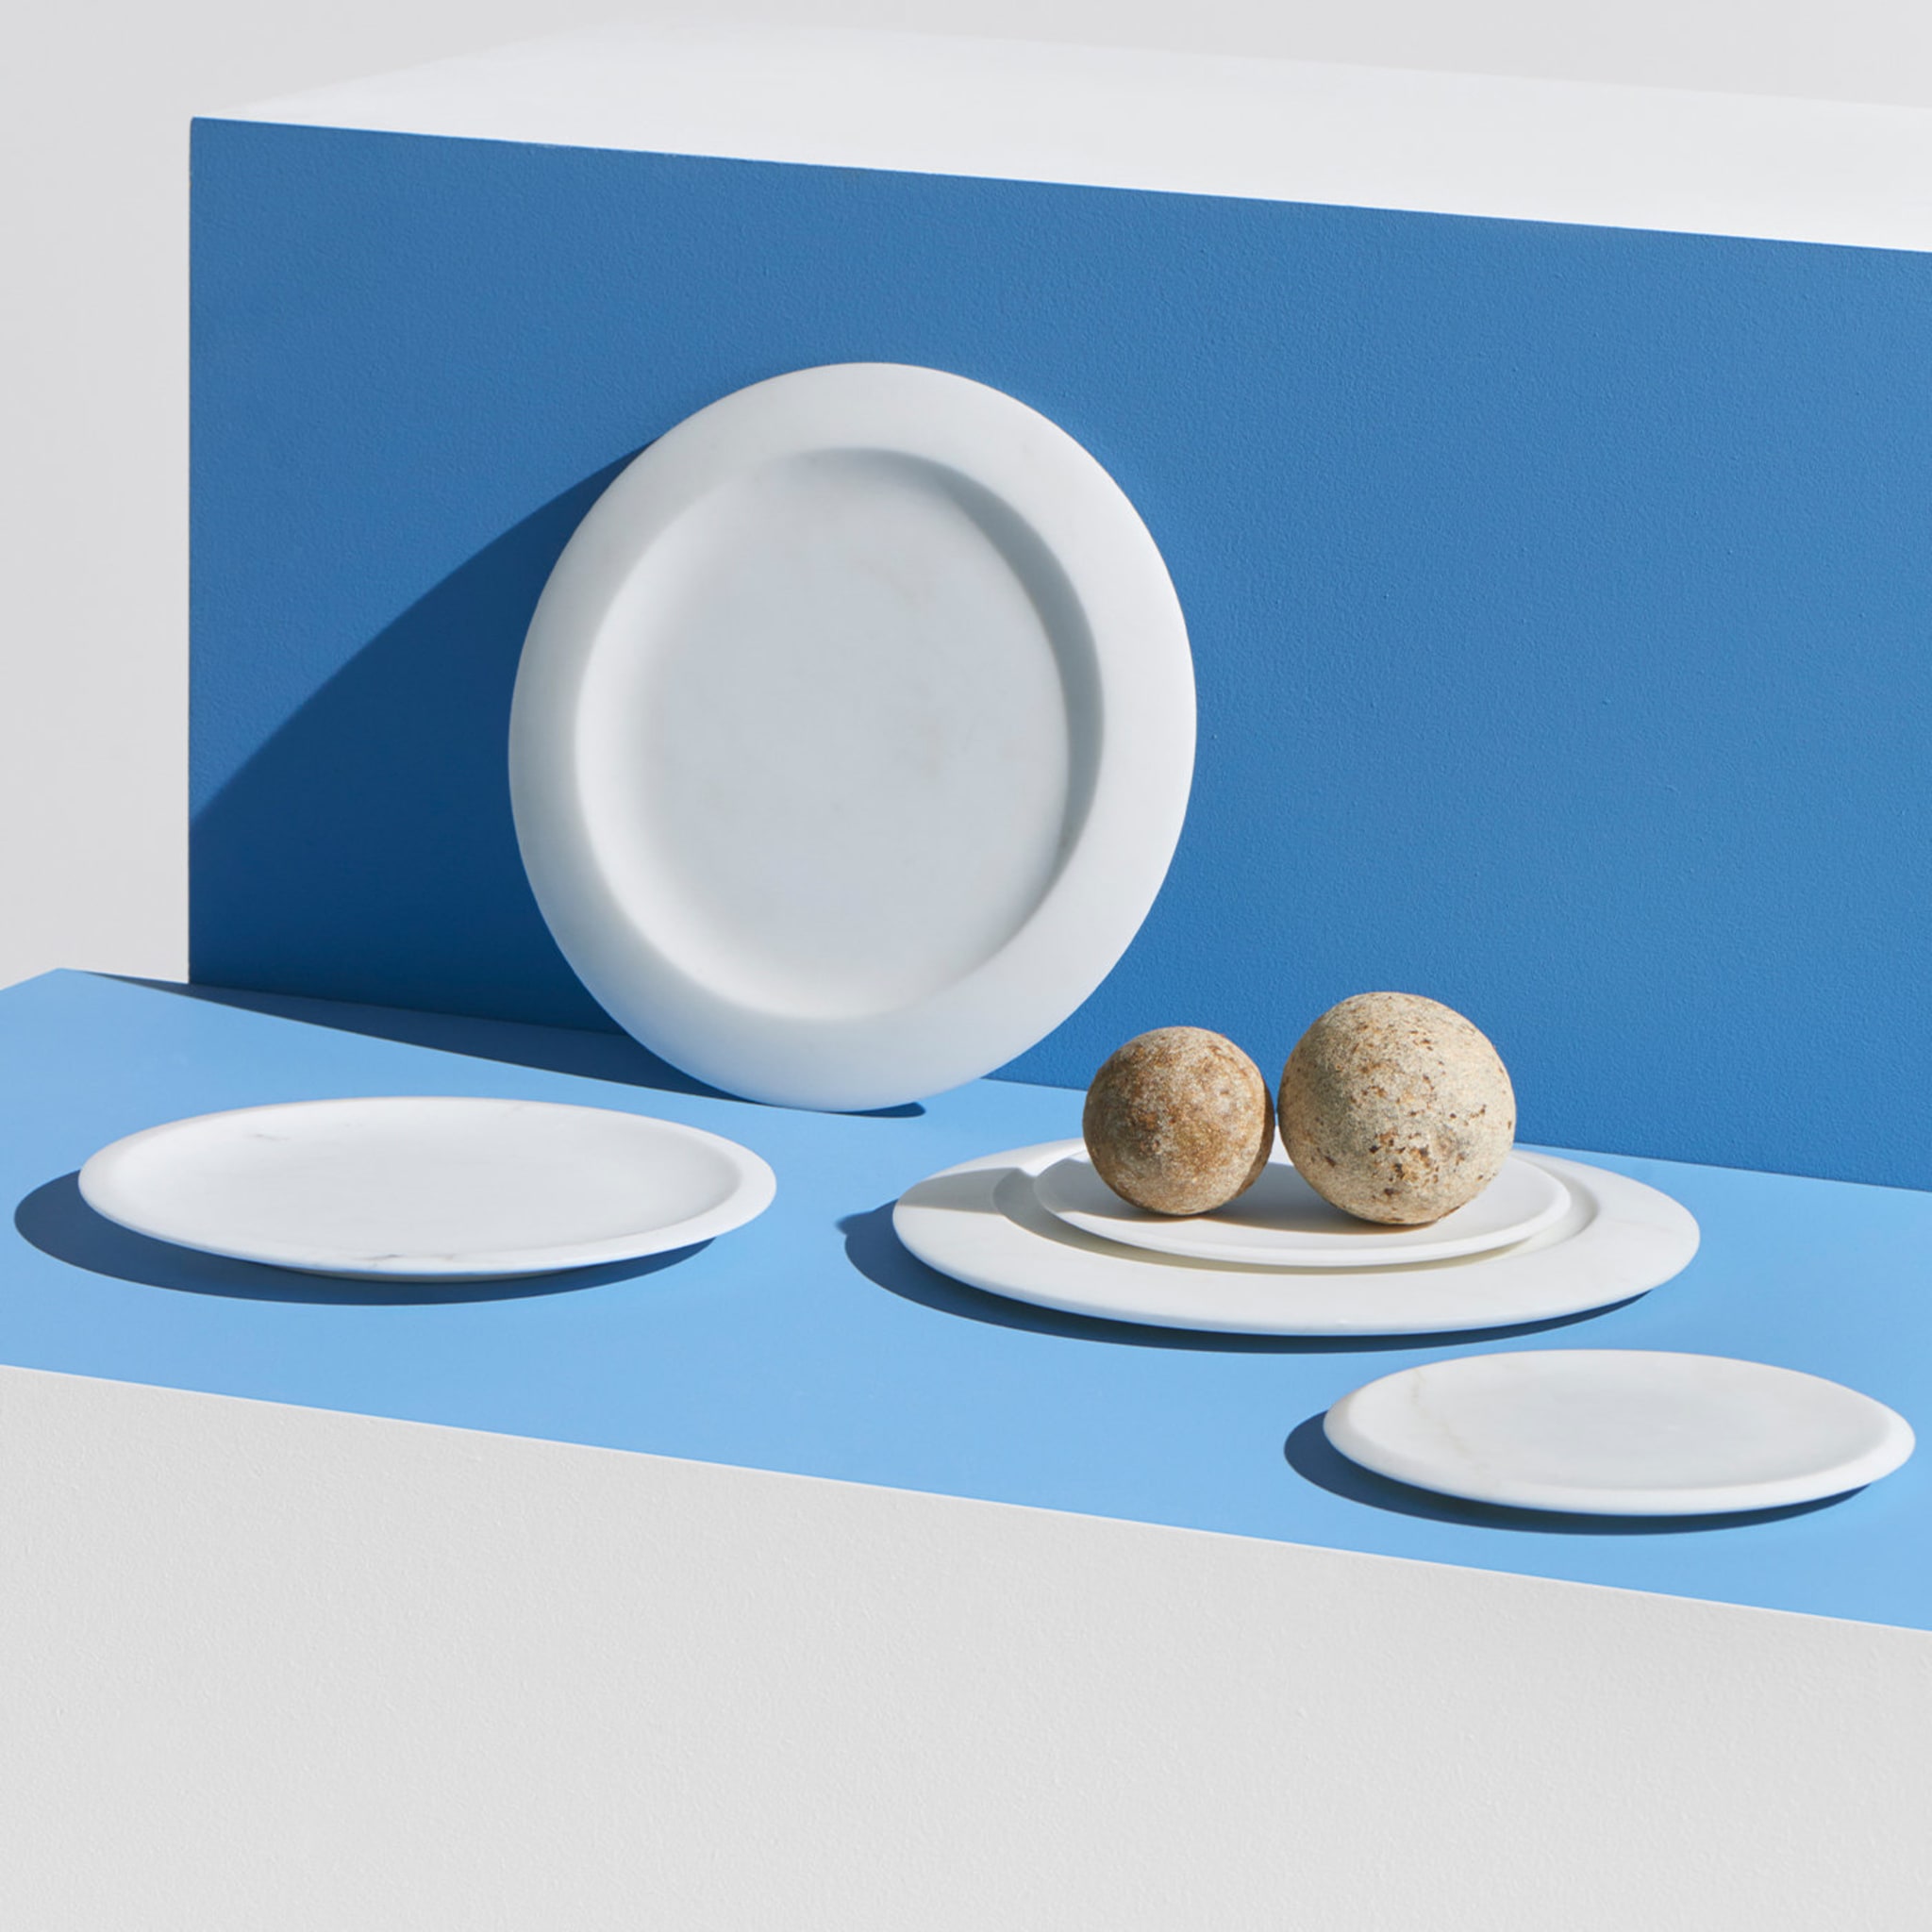 White Michelangelo Dinner Plate by Ivan Colominas #2 - Alternative view 2